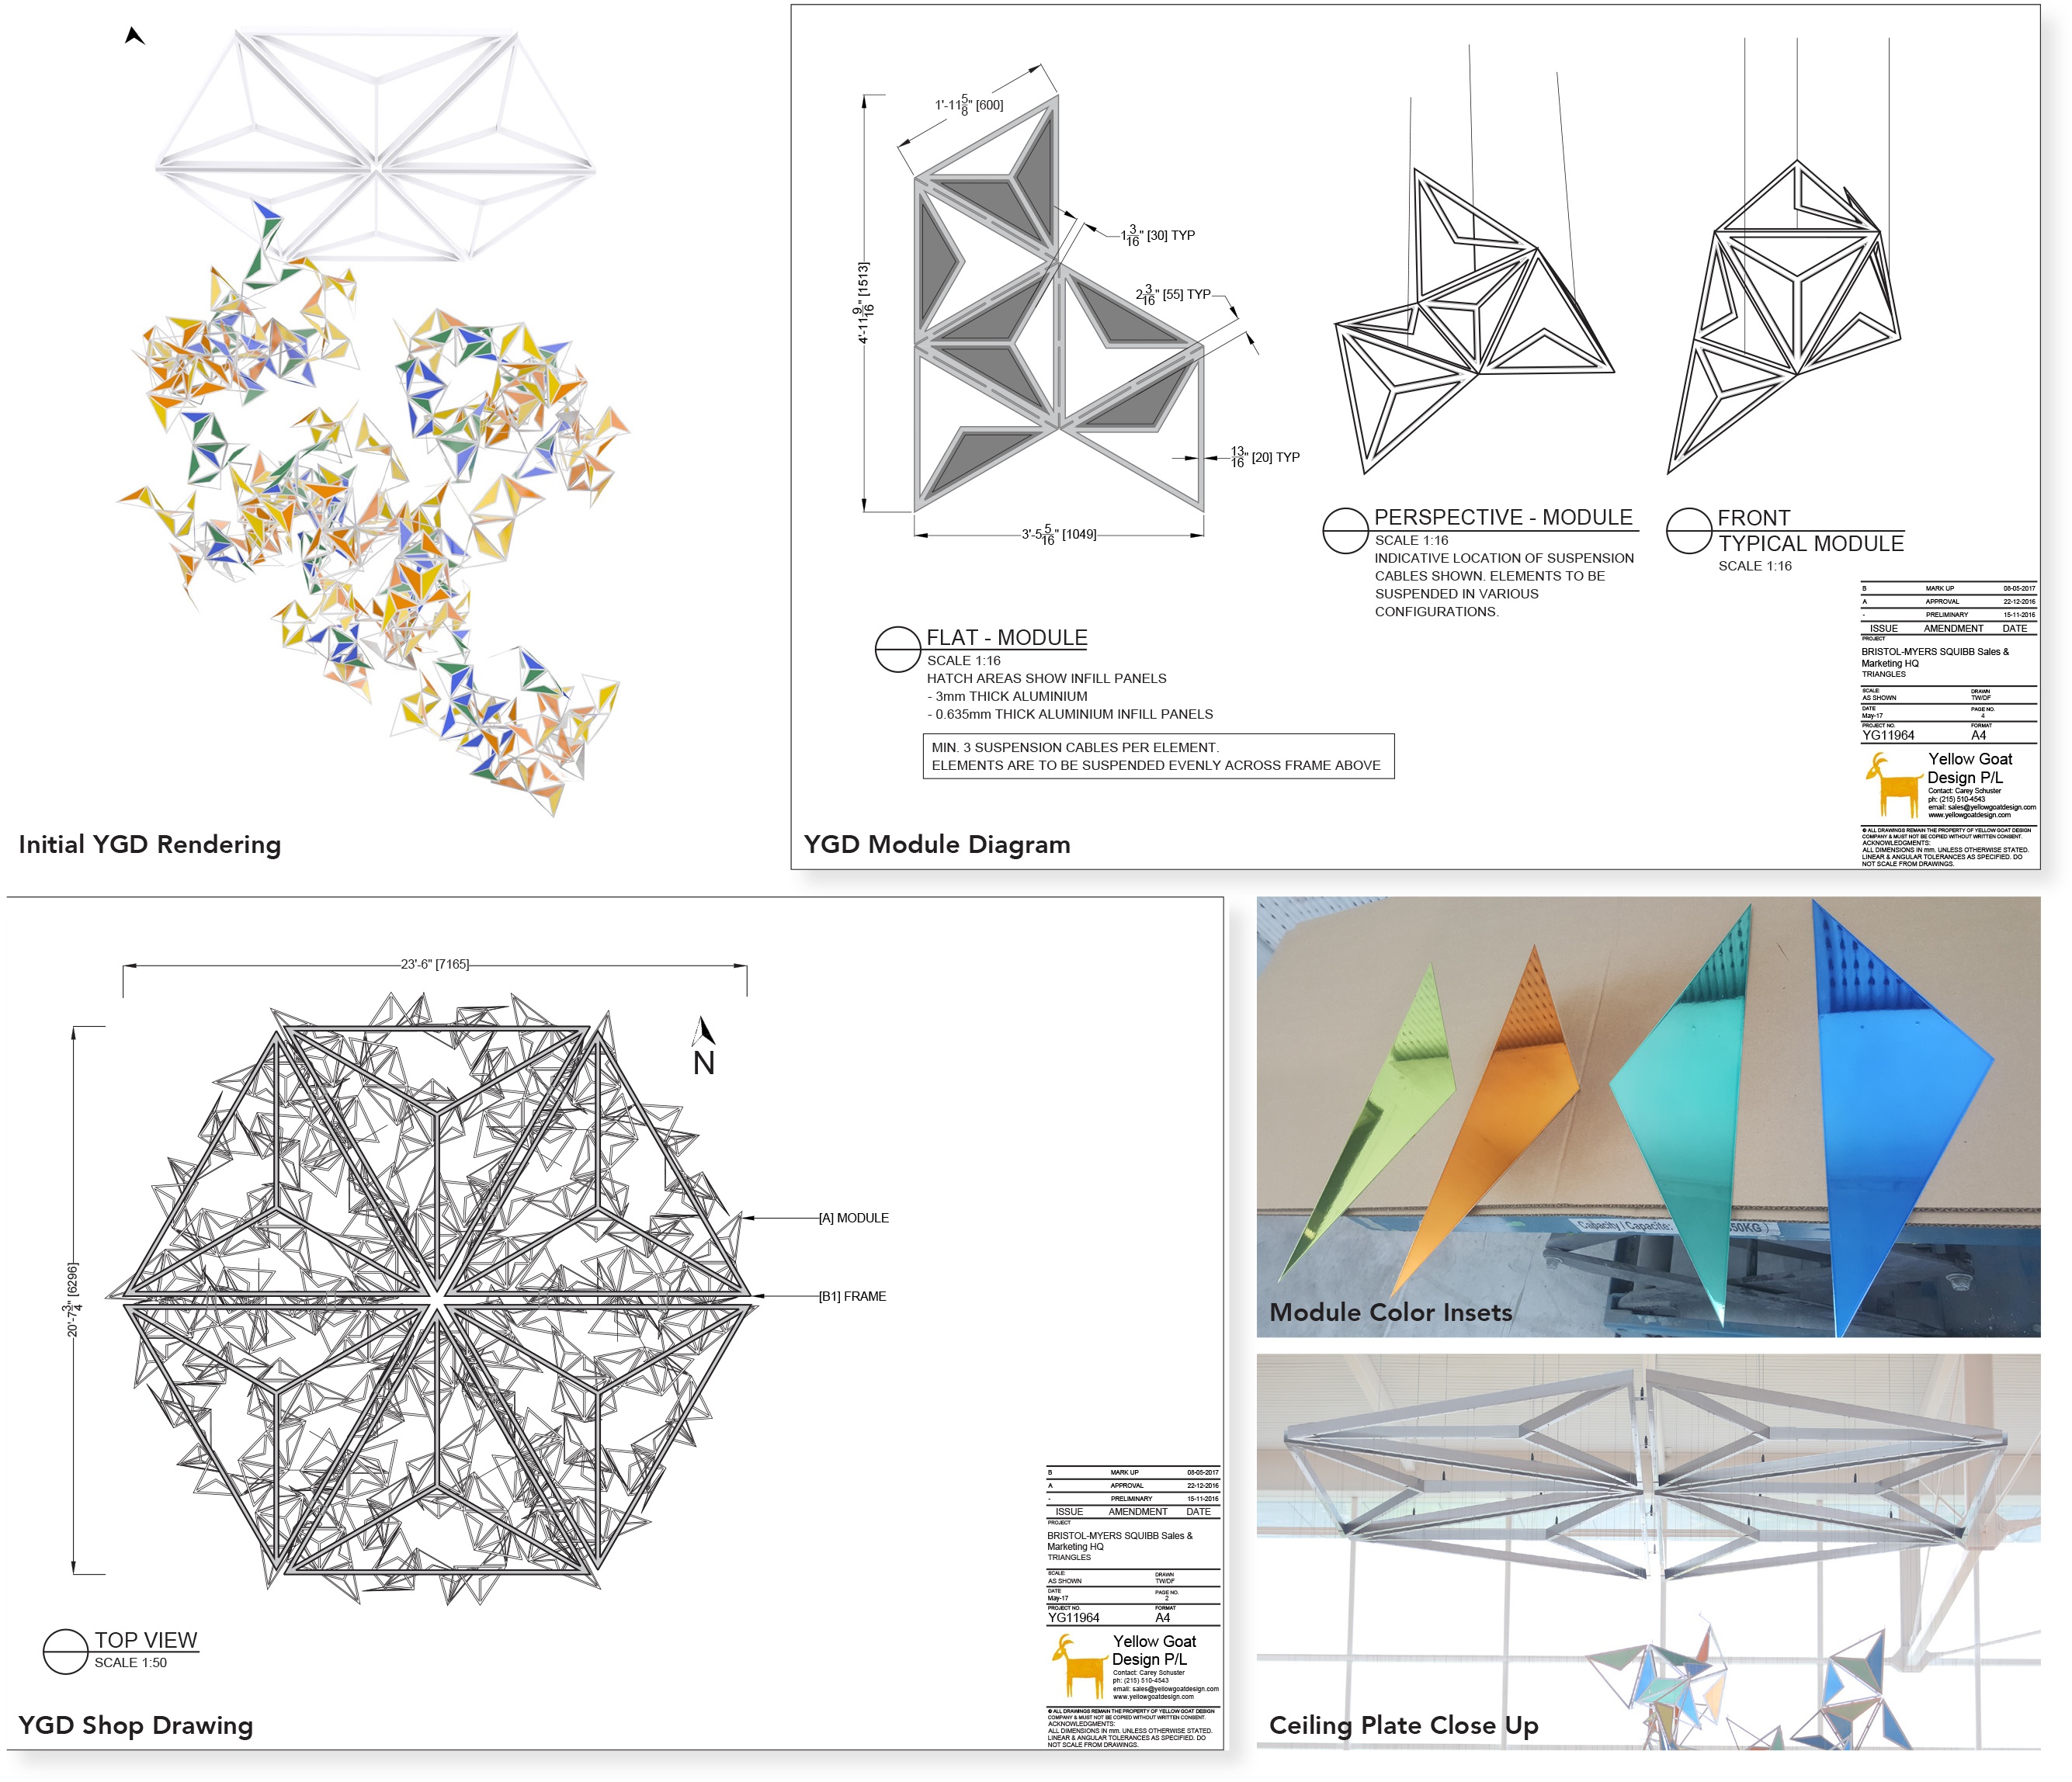 ygd_bristol-myers squibb_design development collage.jpg